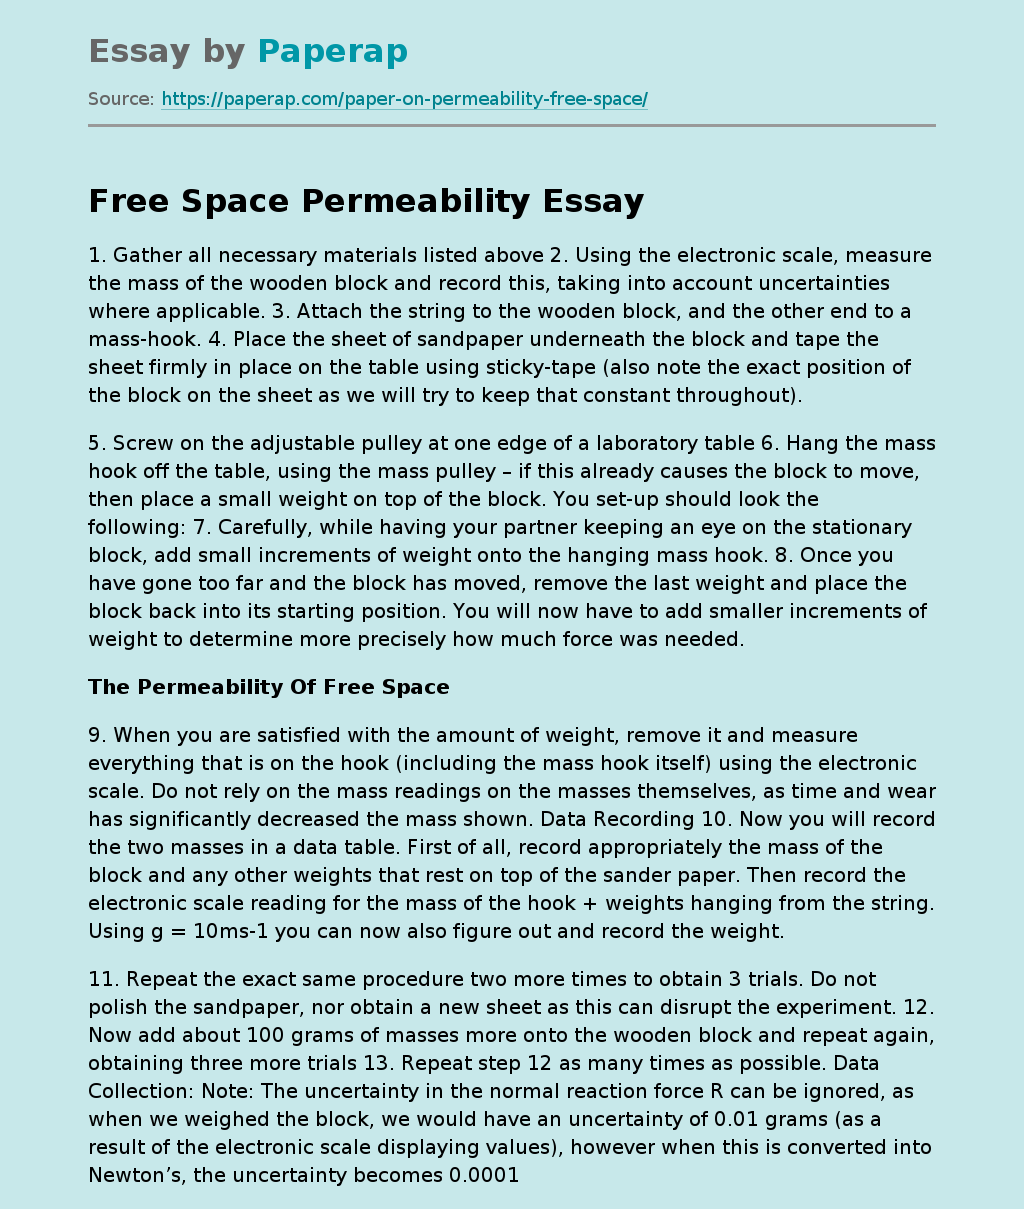 Free Space Permeability